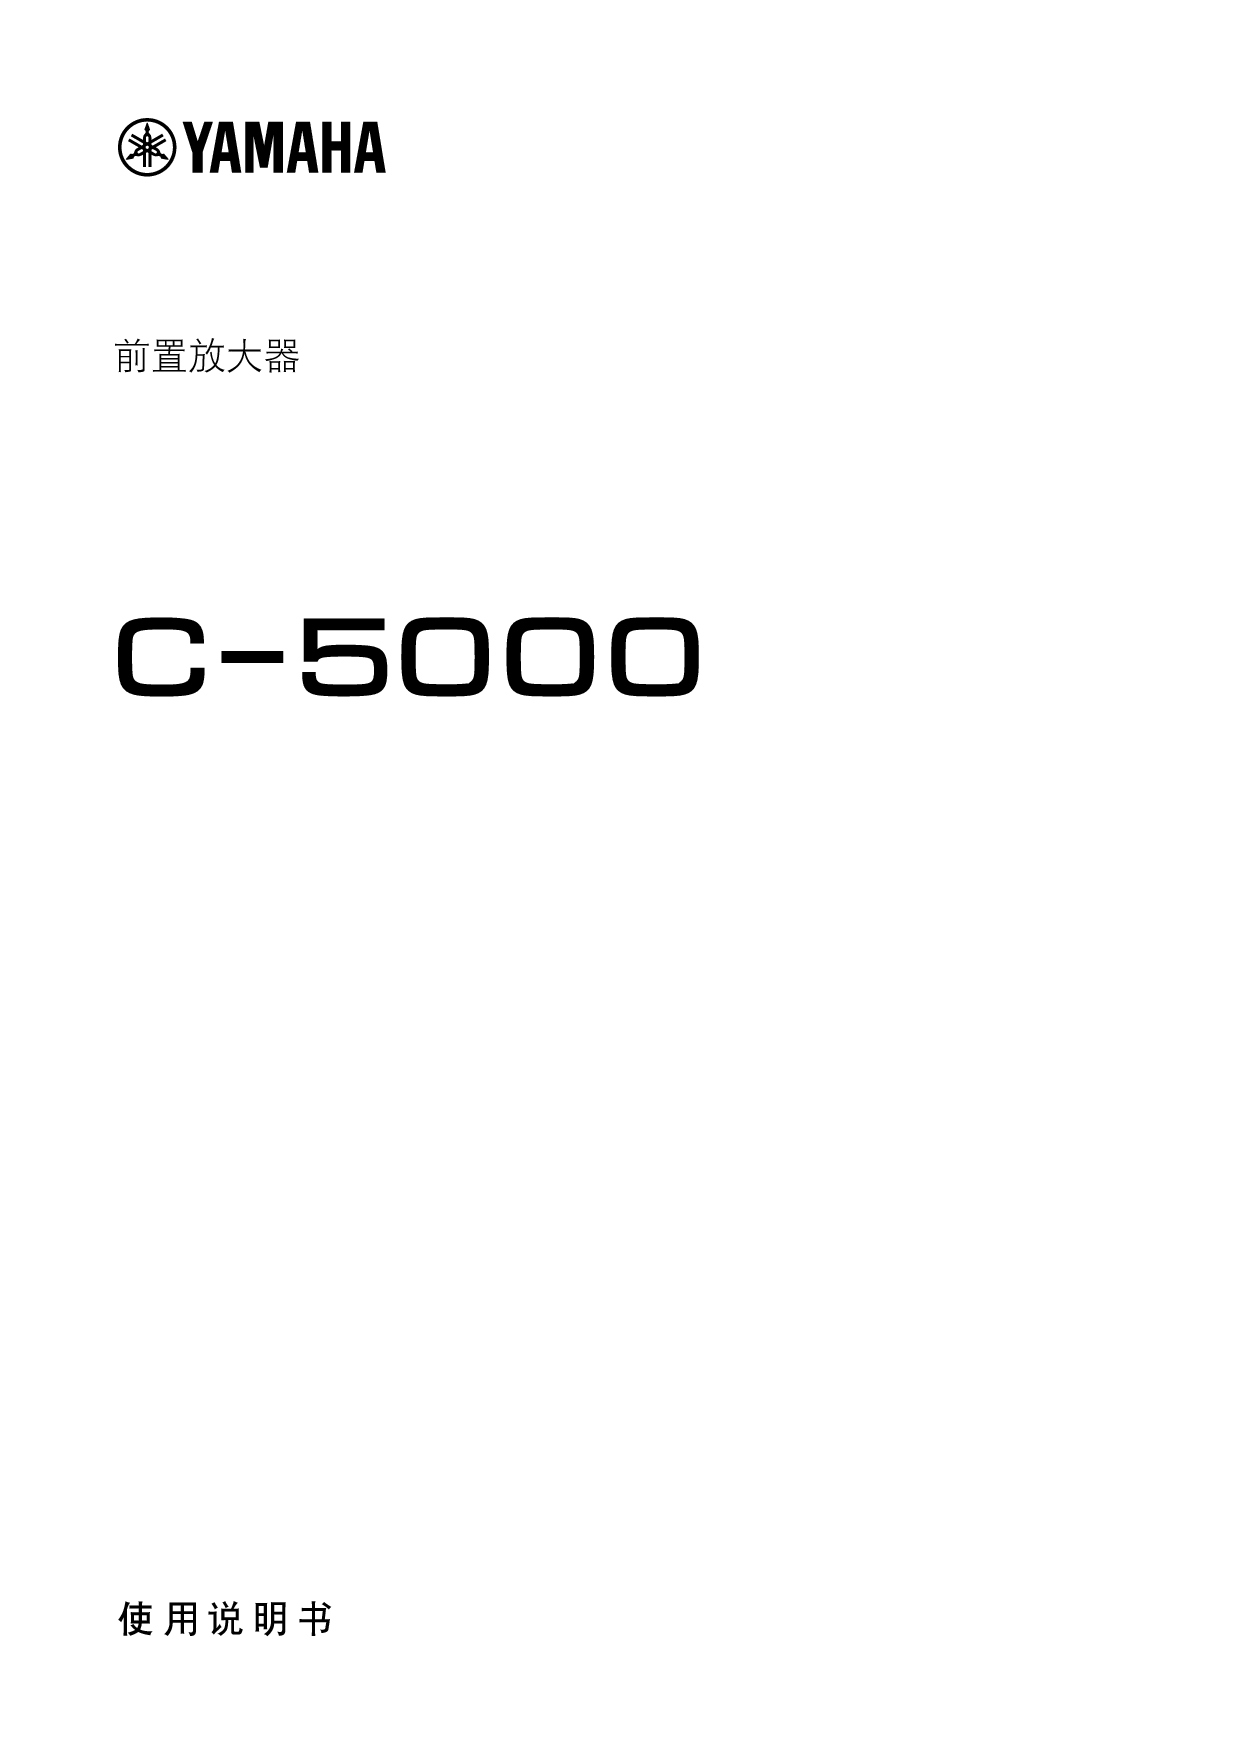 雅马哈 Yamaha C-5000 使用说明书 封面